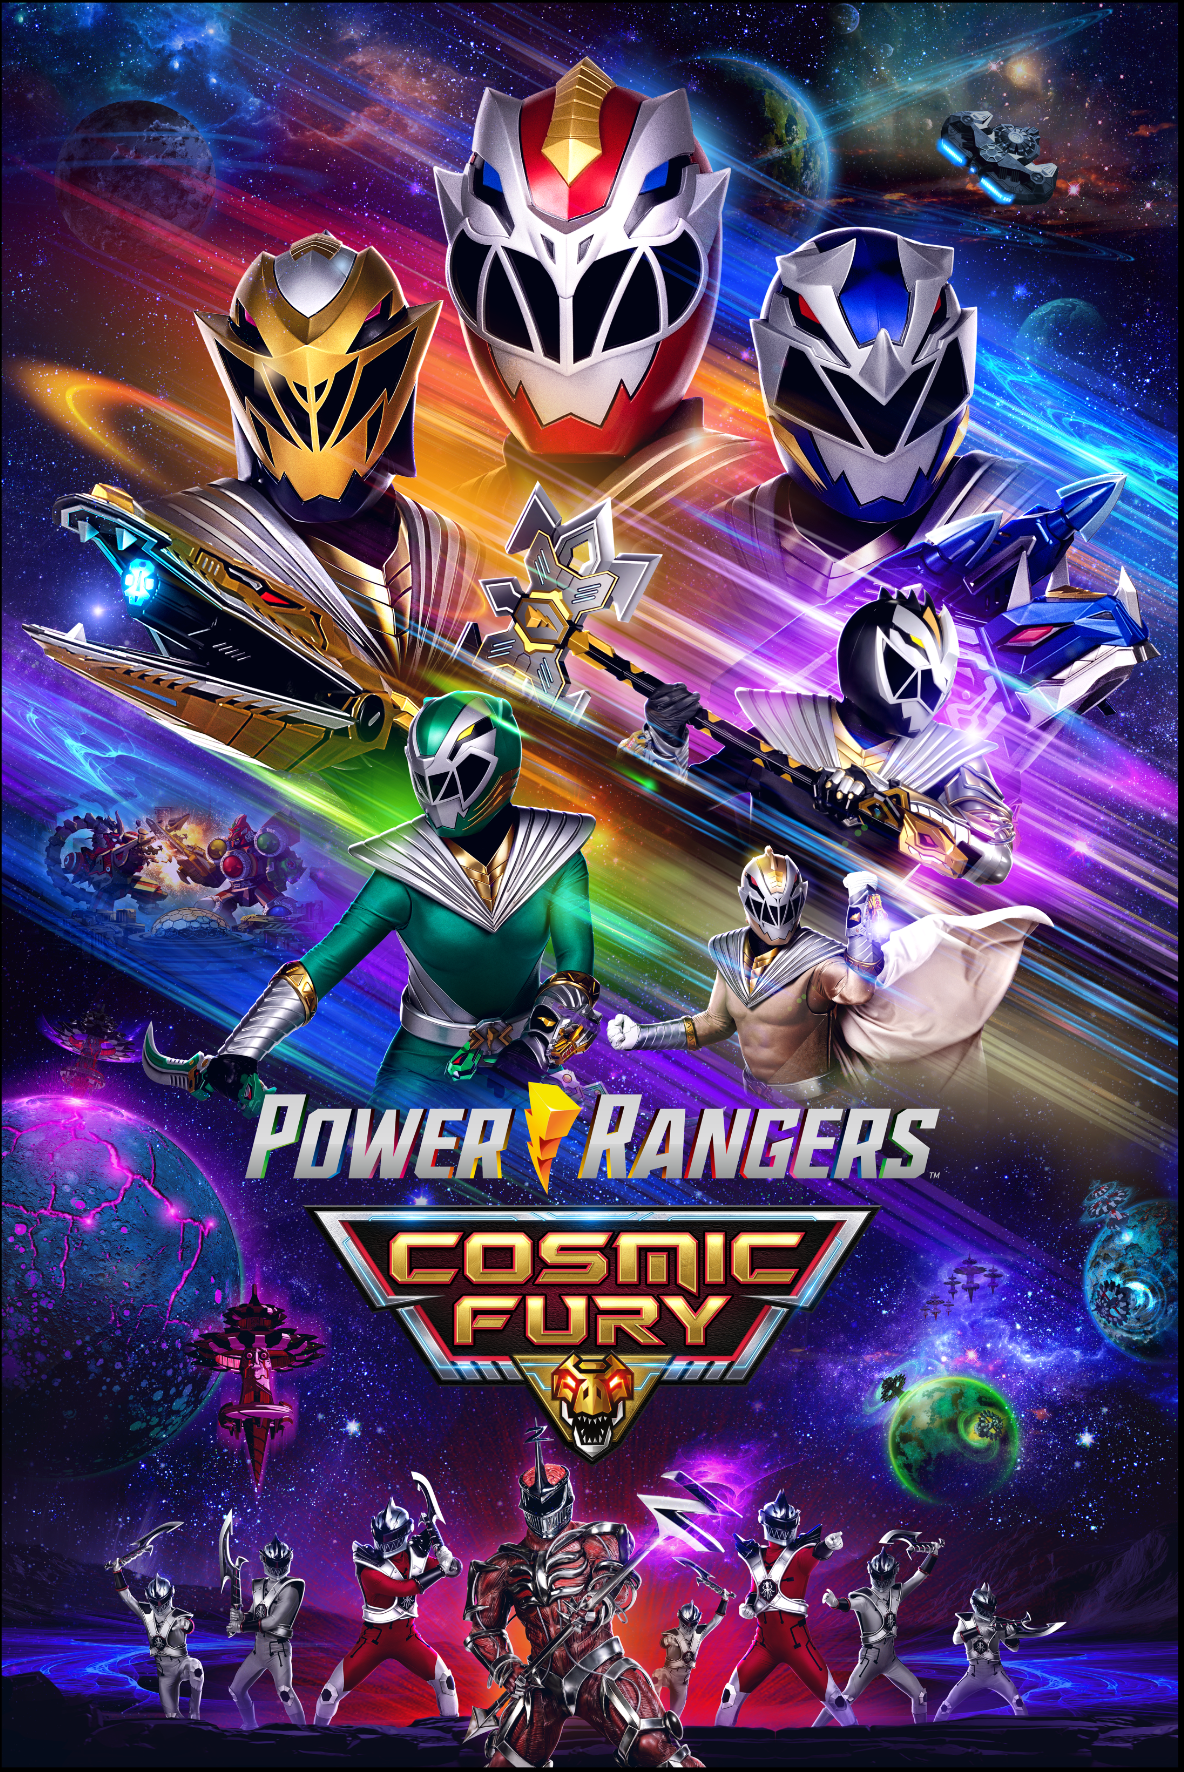 power-rangers-cosmic-fury-poster-6.png